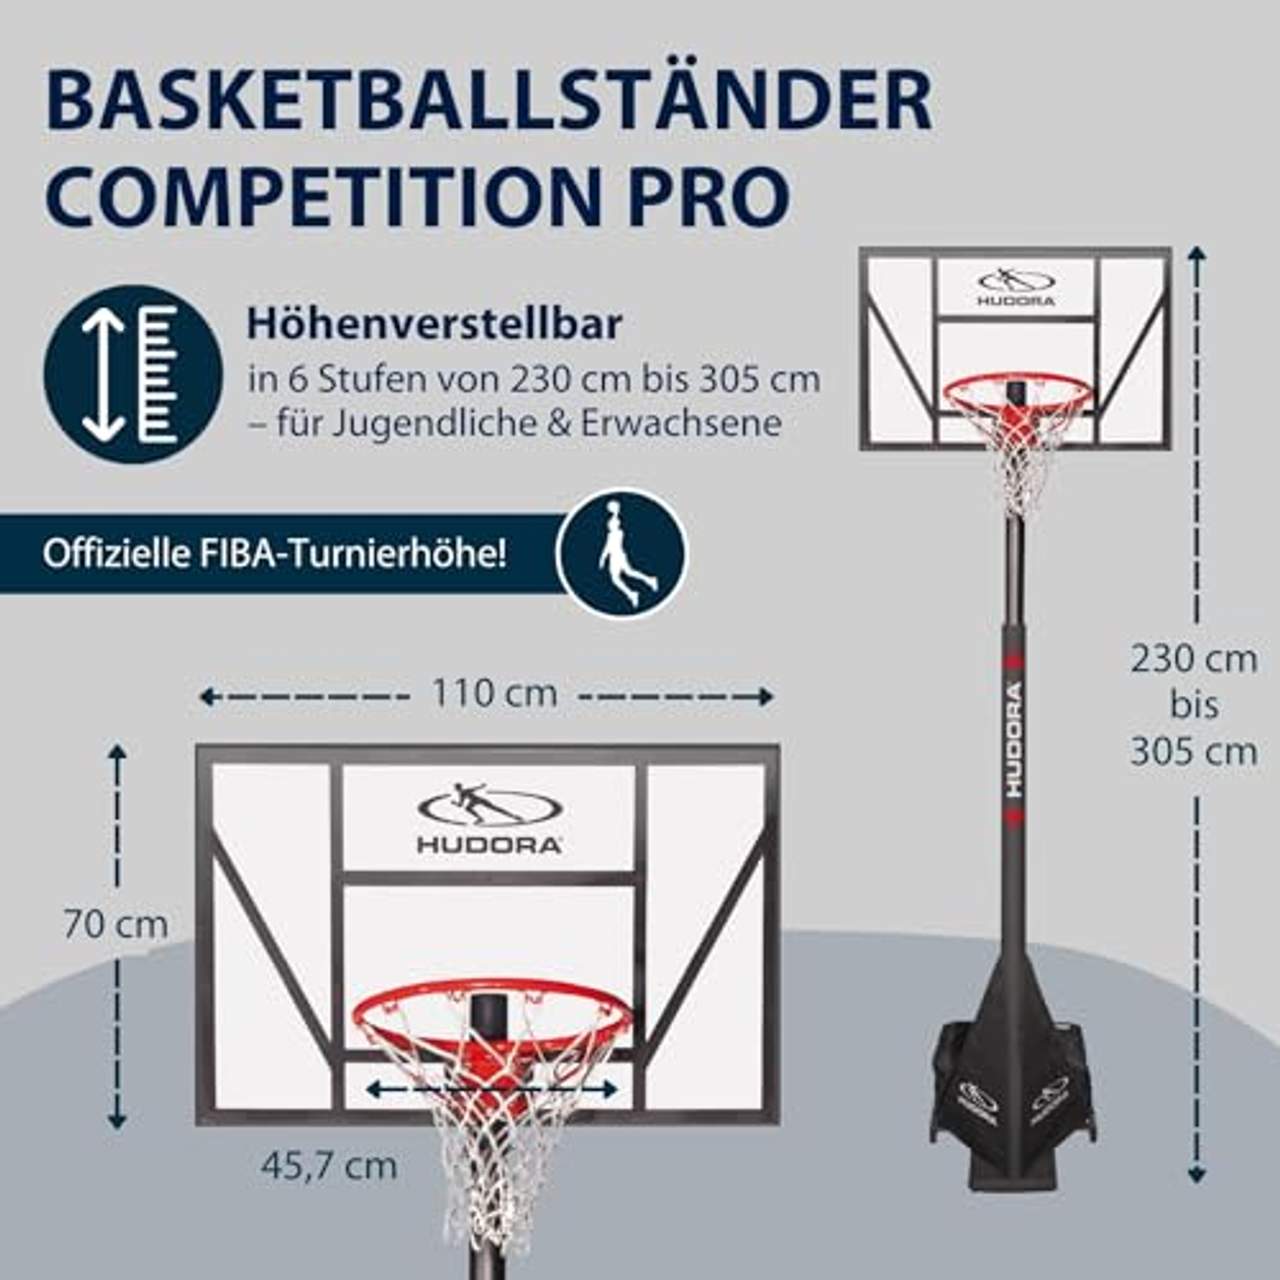 HUDORA Basketball-Ständer 305 Competition Pro